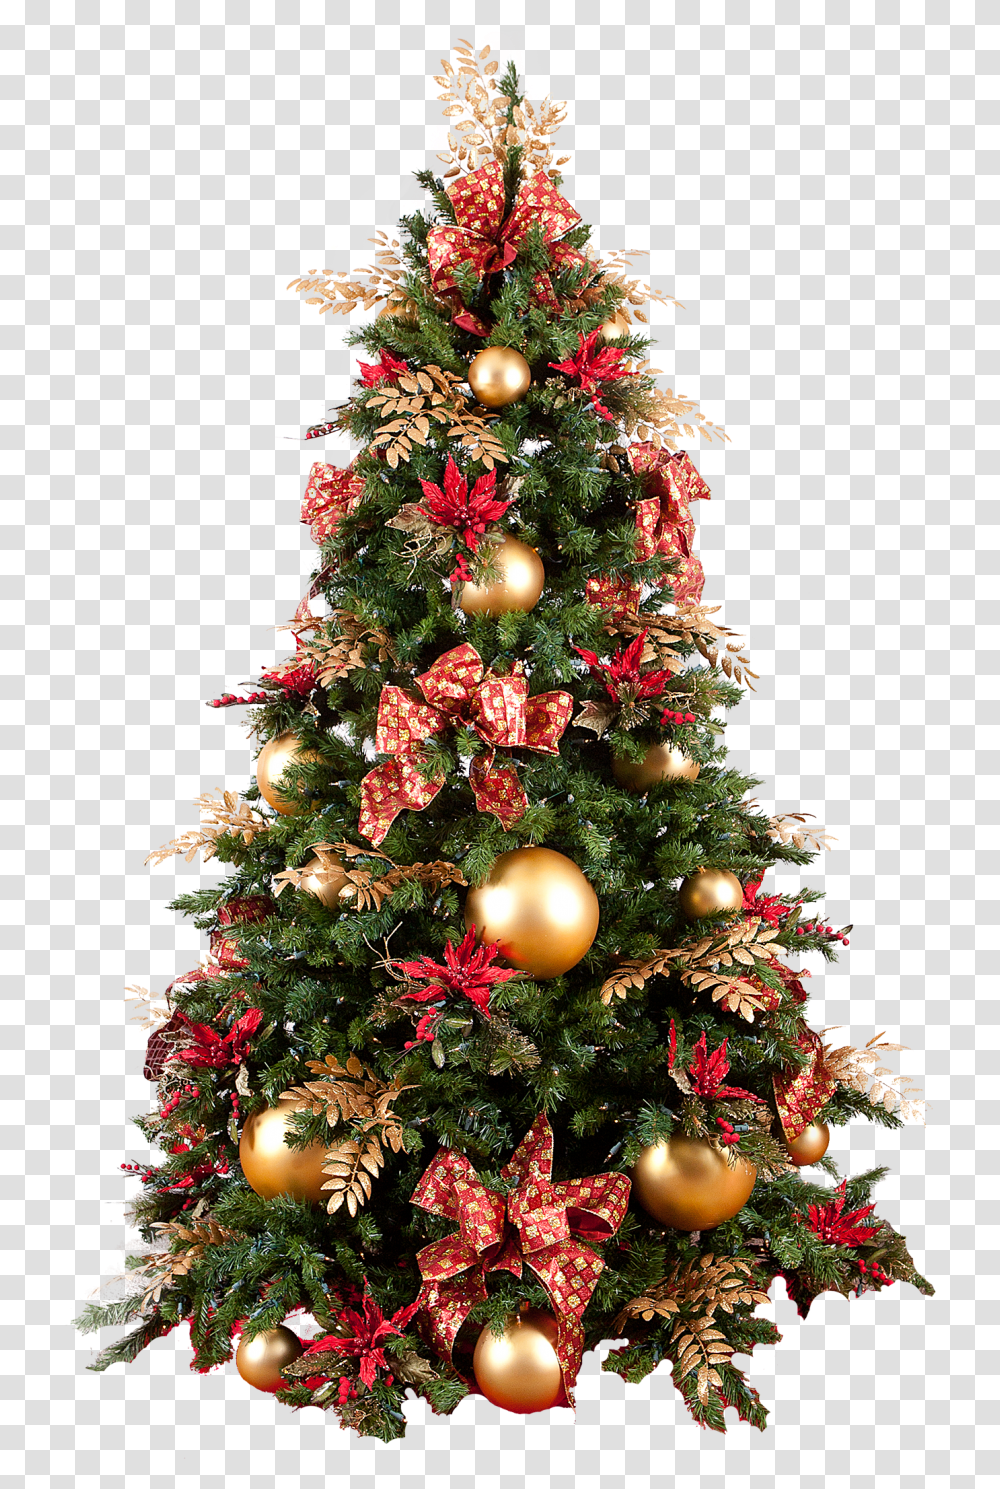 X Mas Tree With Presents Image Merry Christmas Tree, Plant, Ornament, Vegetation, Bush Transparent Png